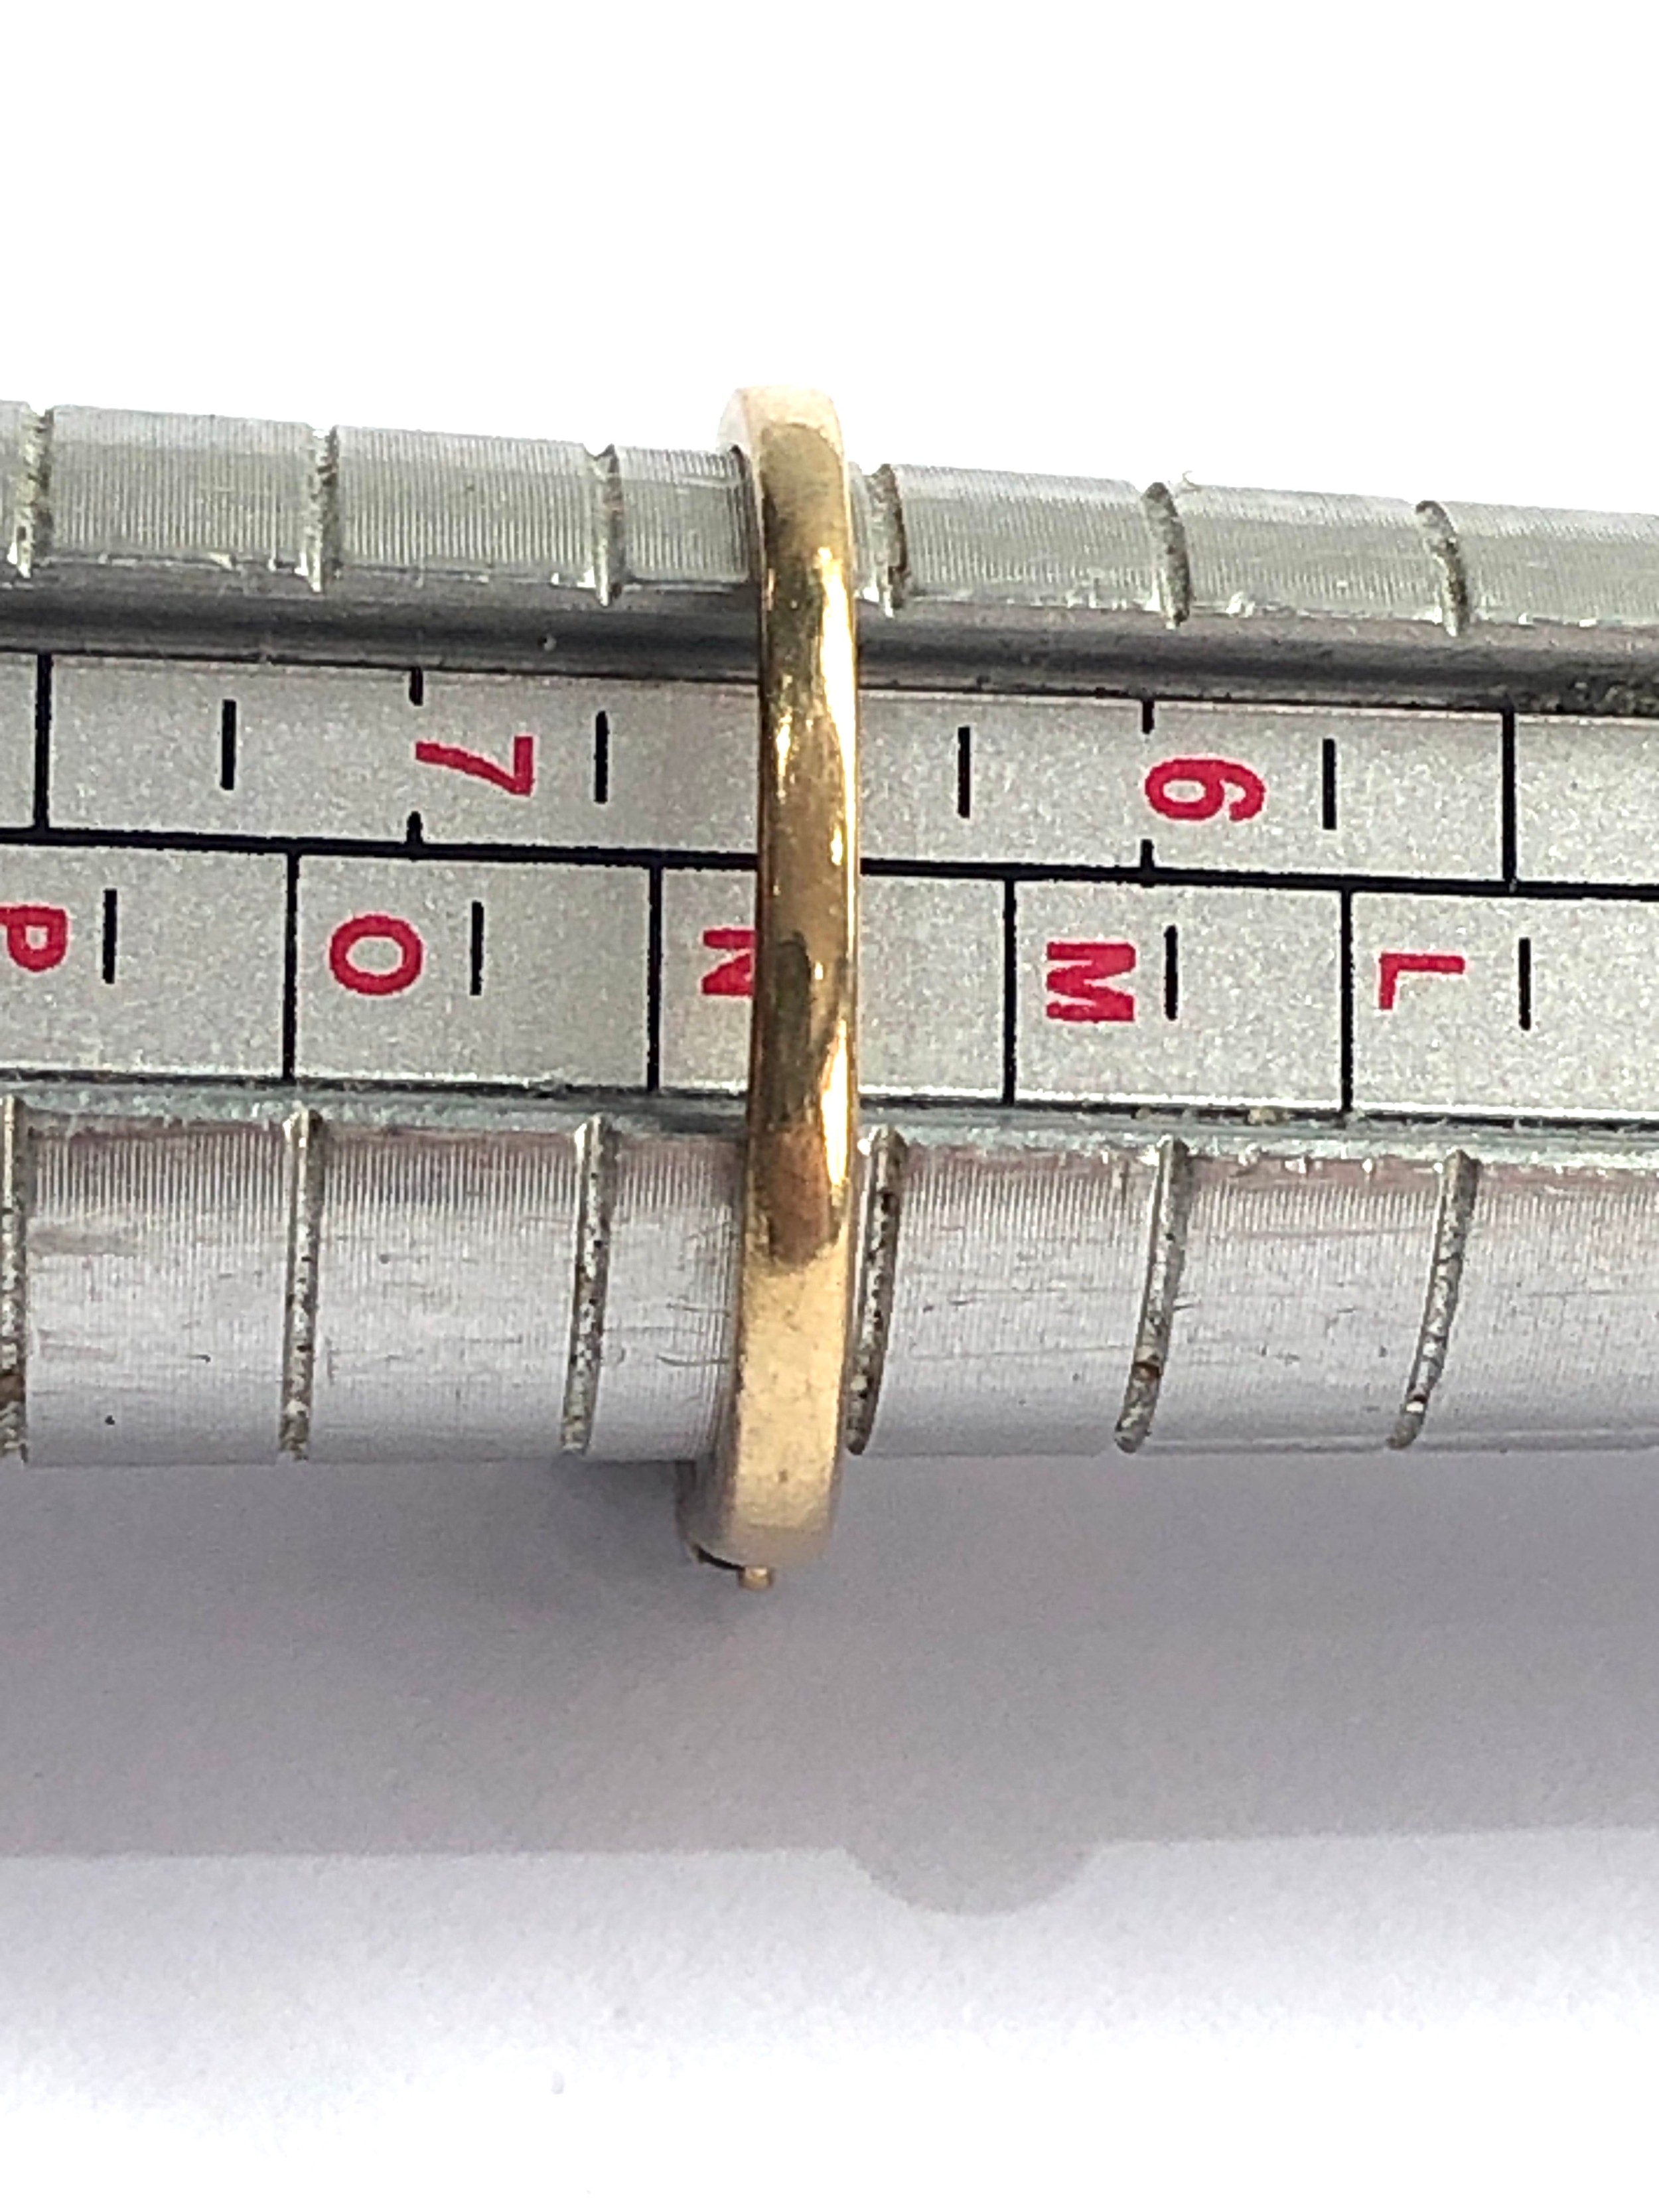 9ct gold diamond ring weight 1.6g - Image 3 of 3